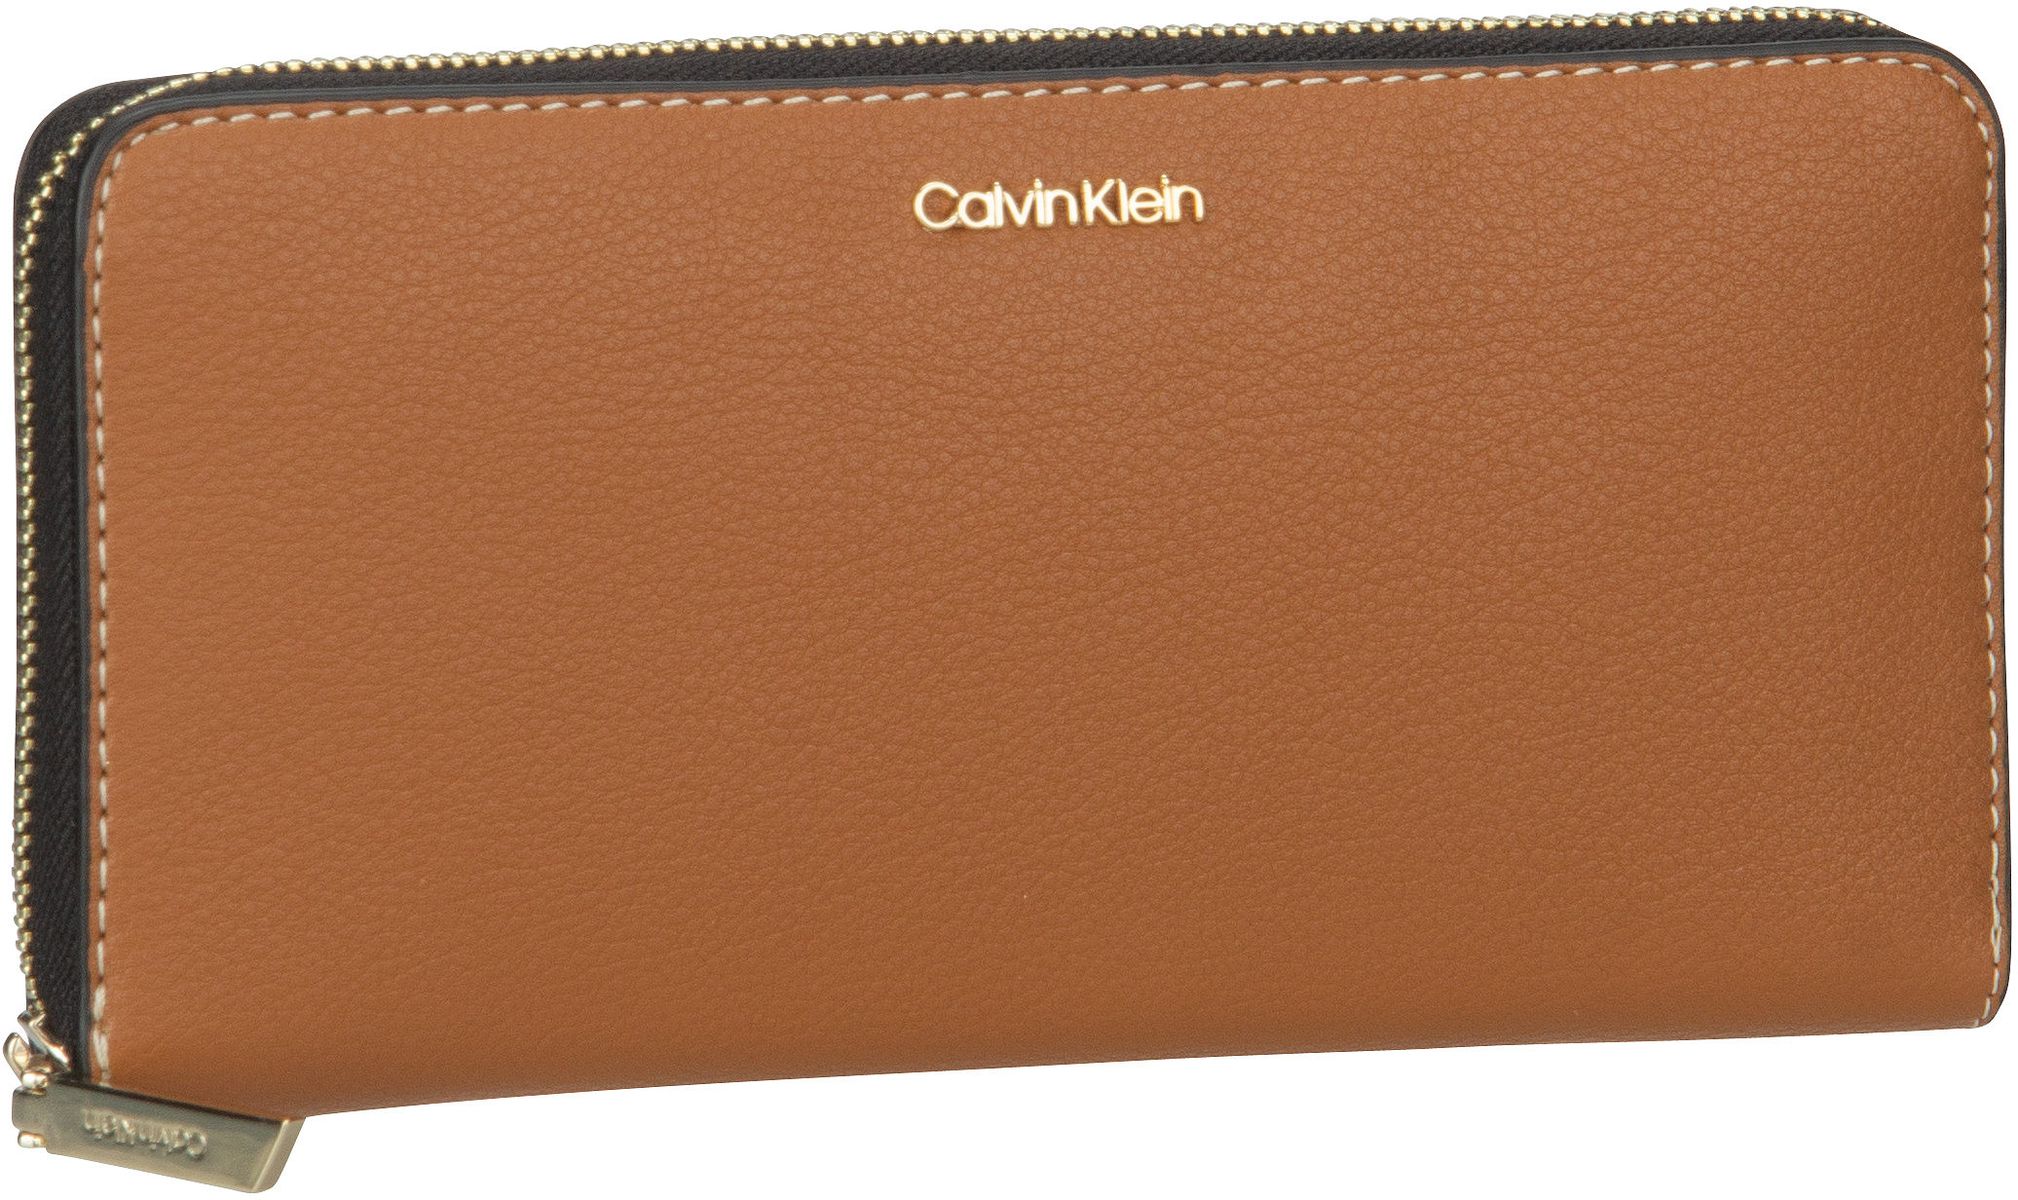 Calvin Klein CK Z/A Wallet LG - Cognac